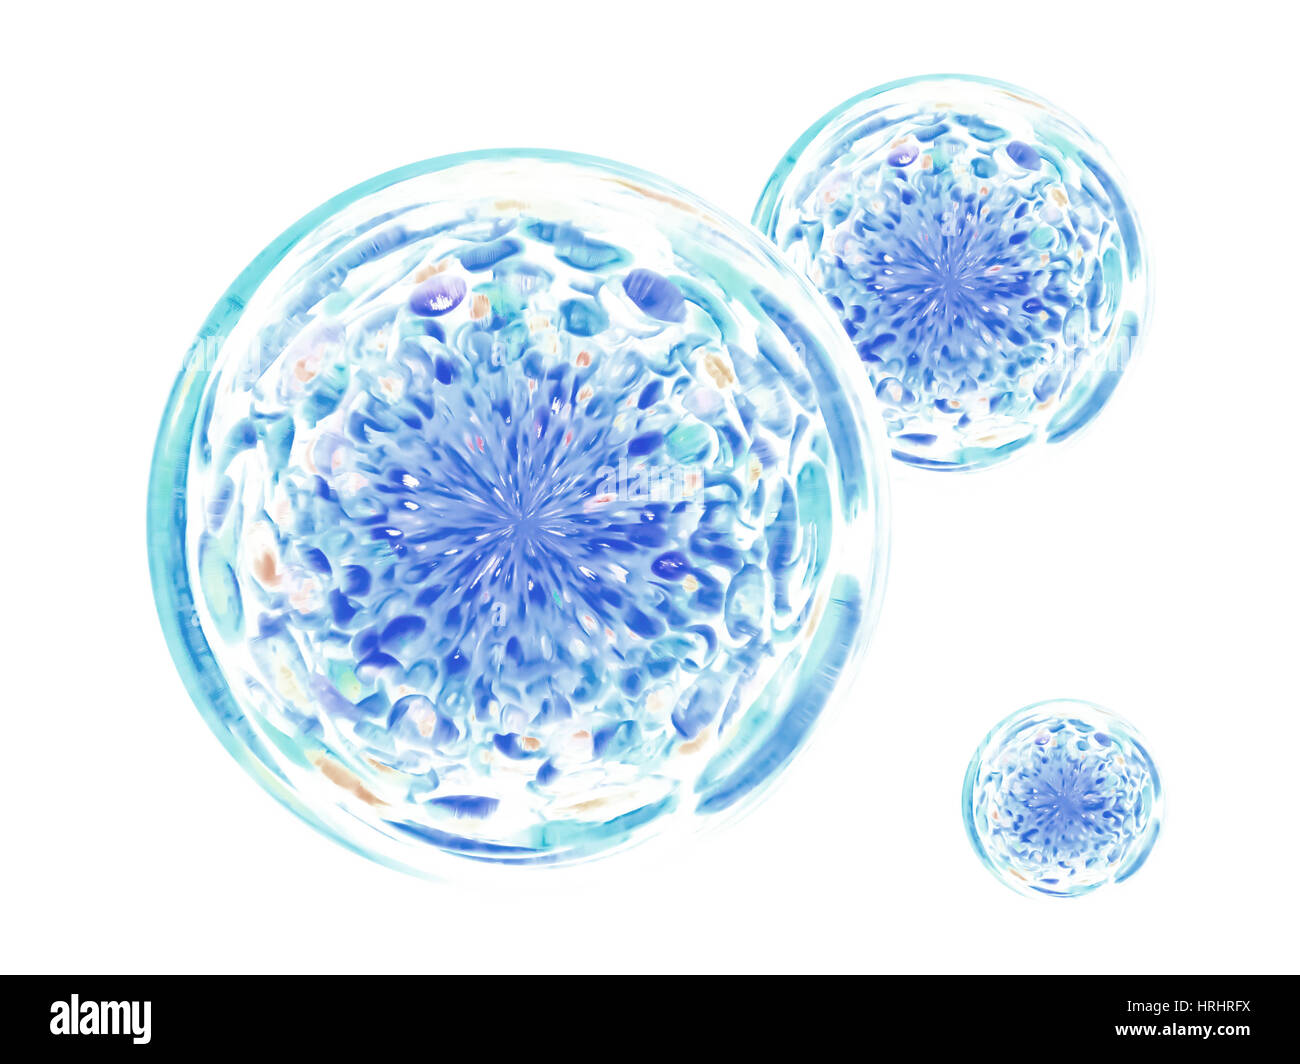 Virus - Bacterias - Celular - Microbio - Resumen ilustración Foto de stock